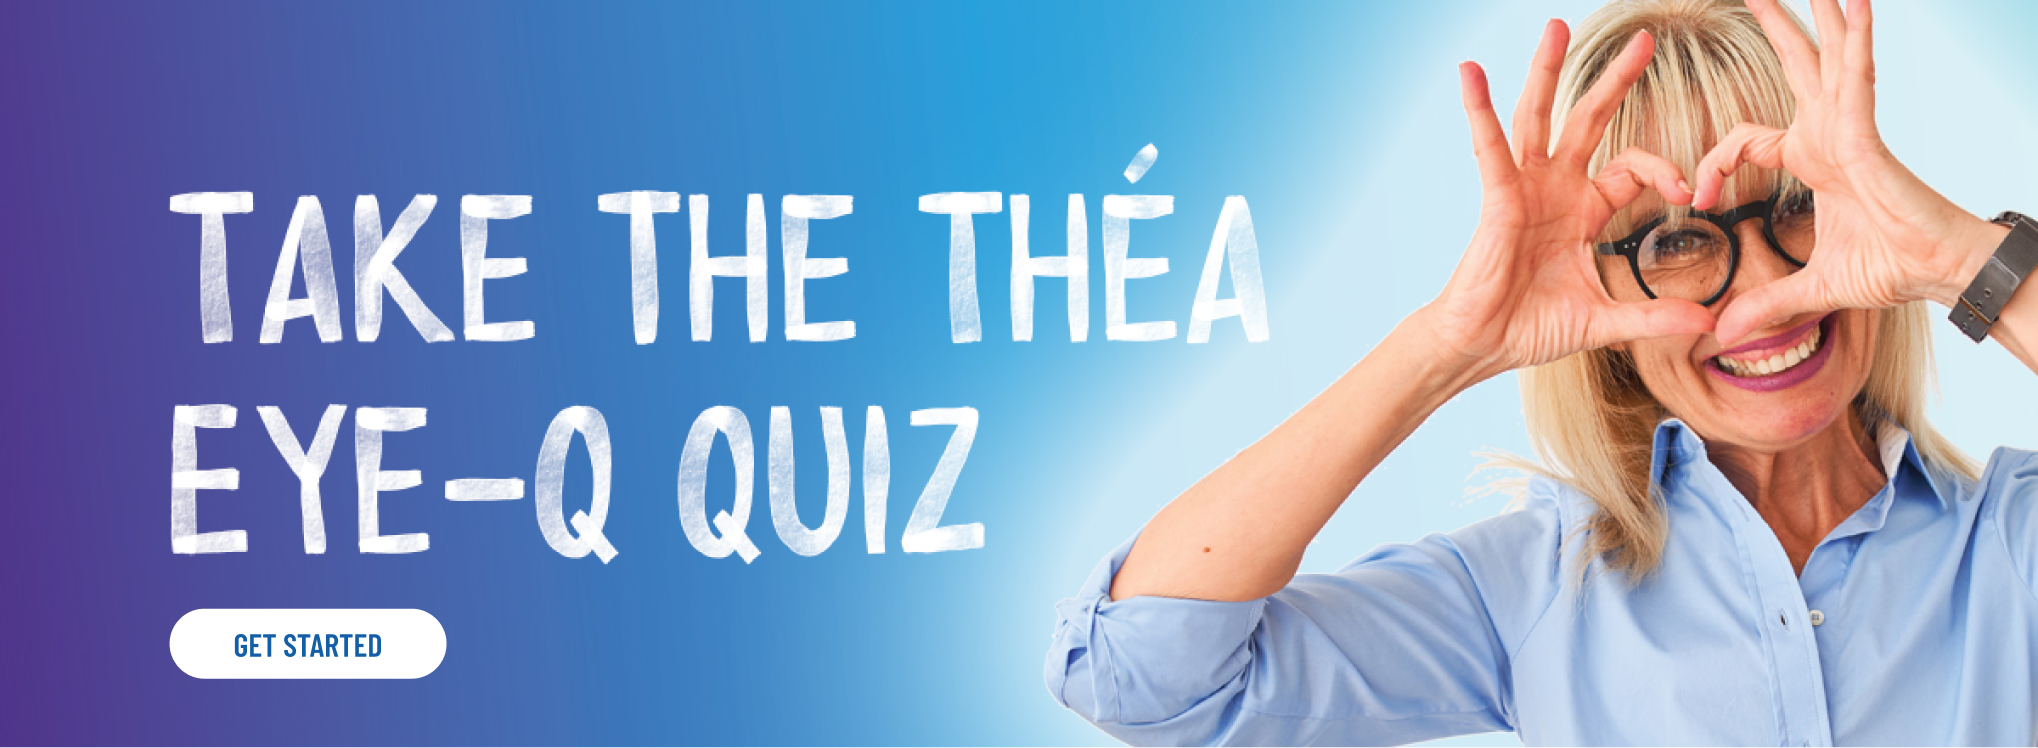 Take the Thea eye Q quiz